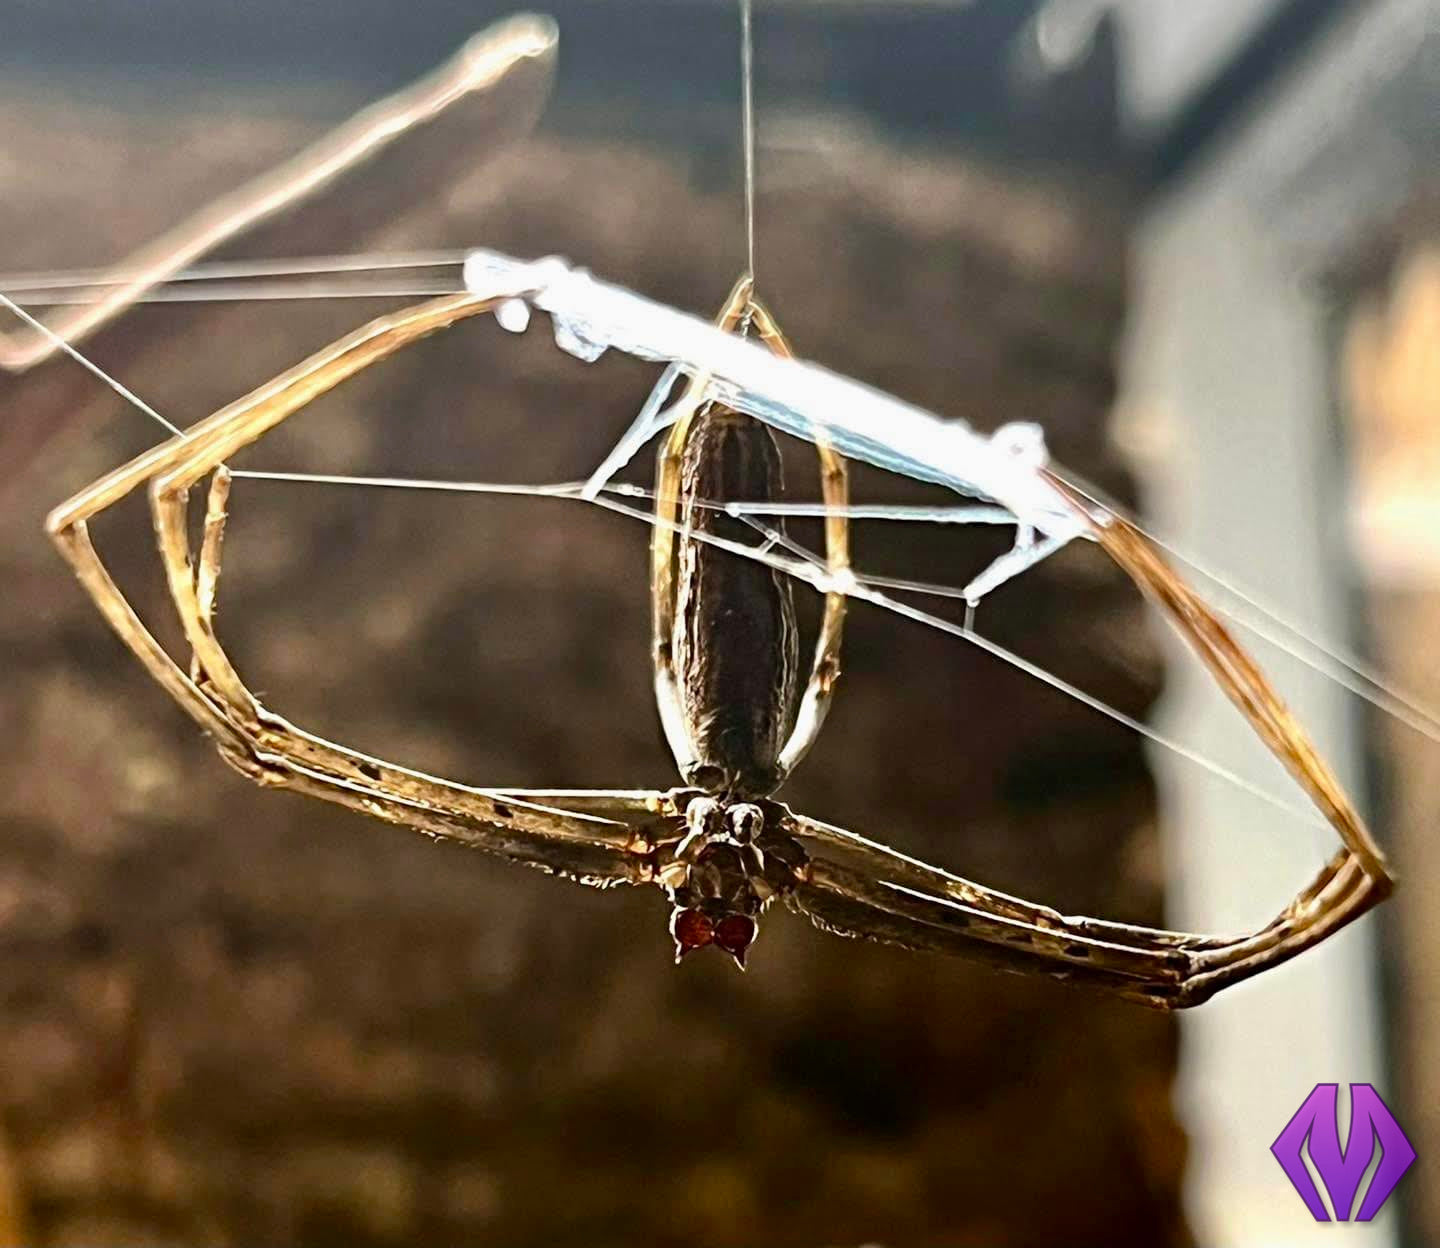 Net-casting spiderling 4i+